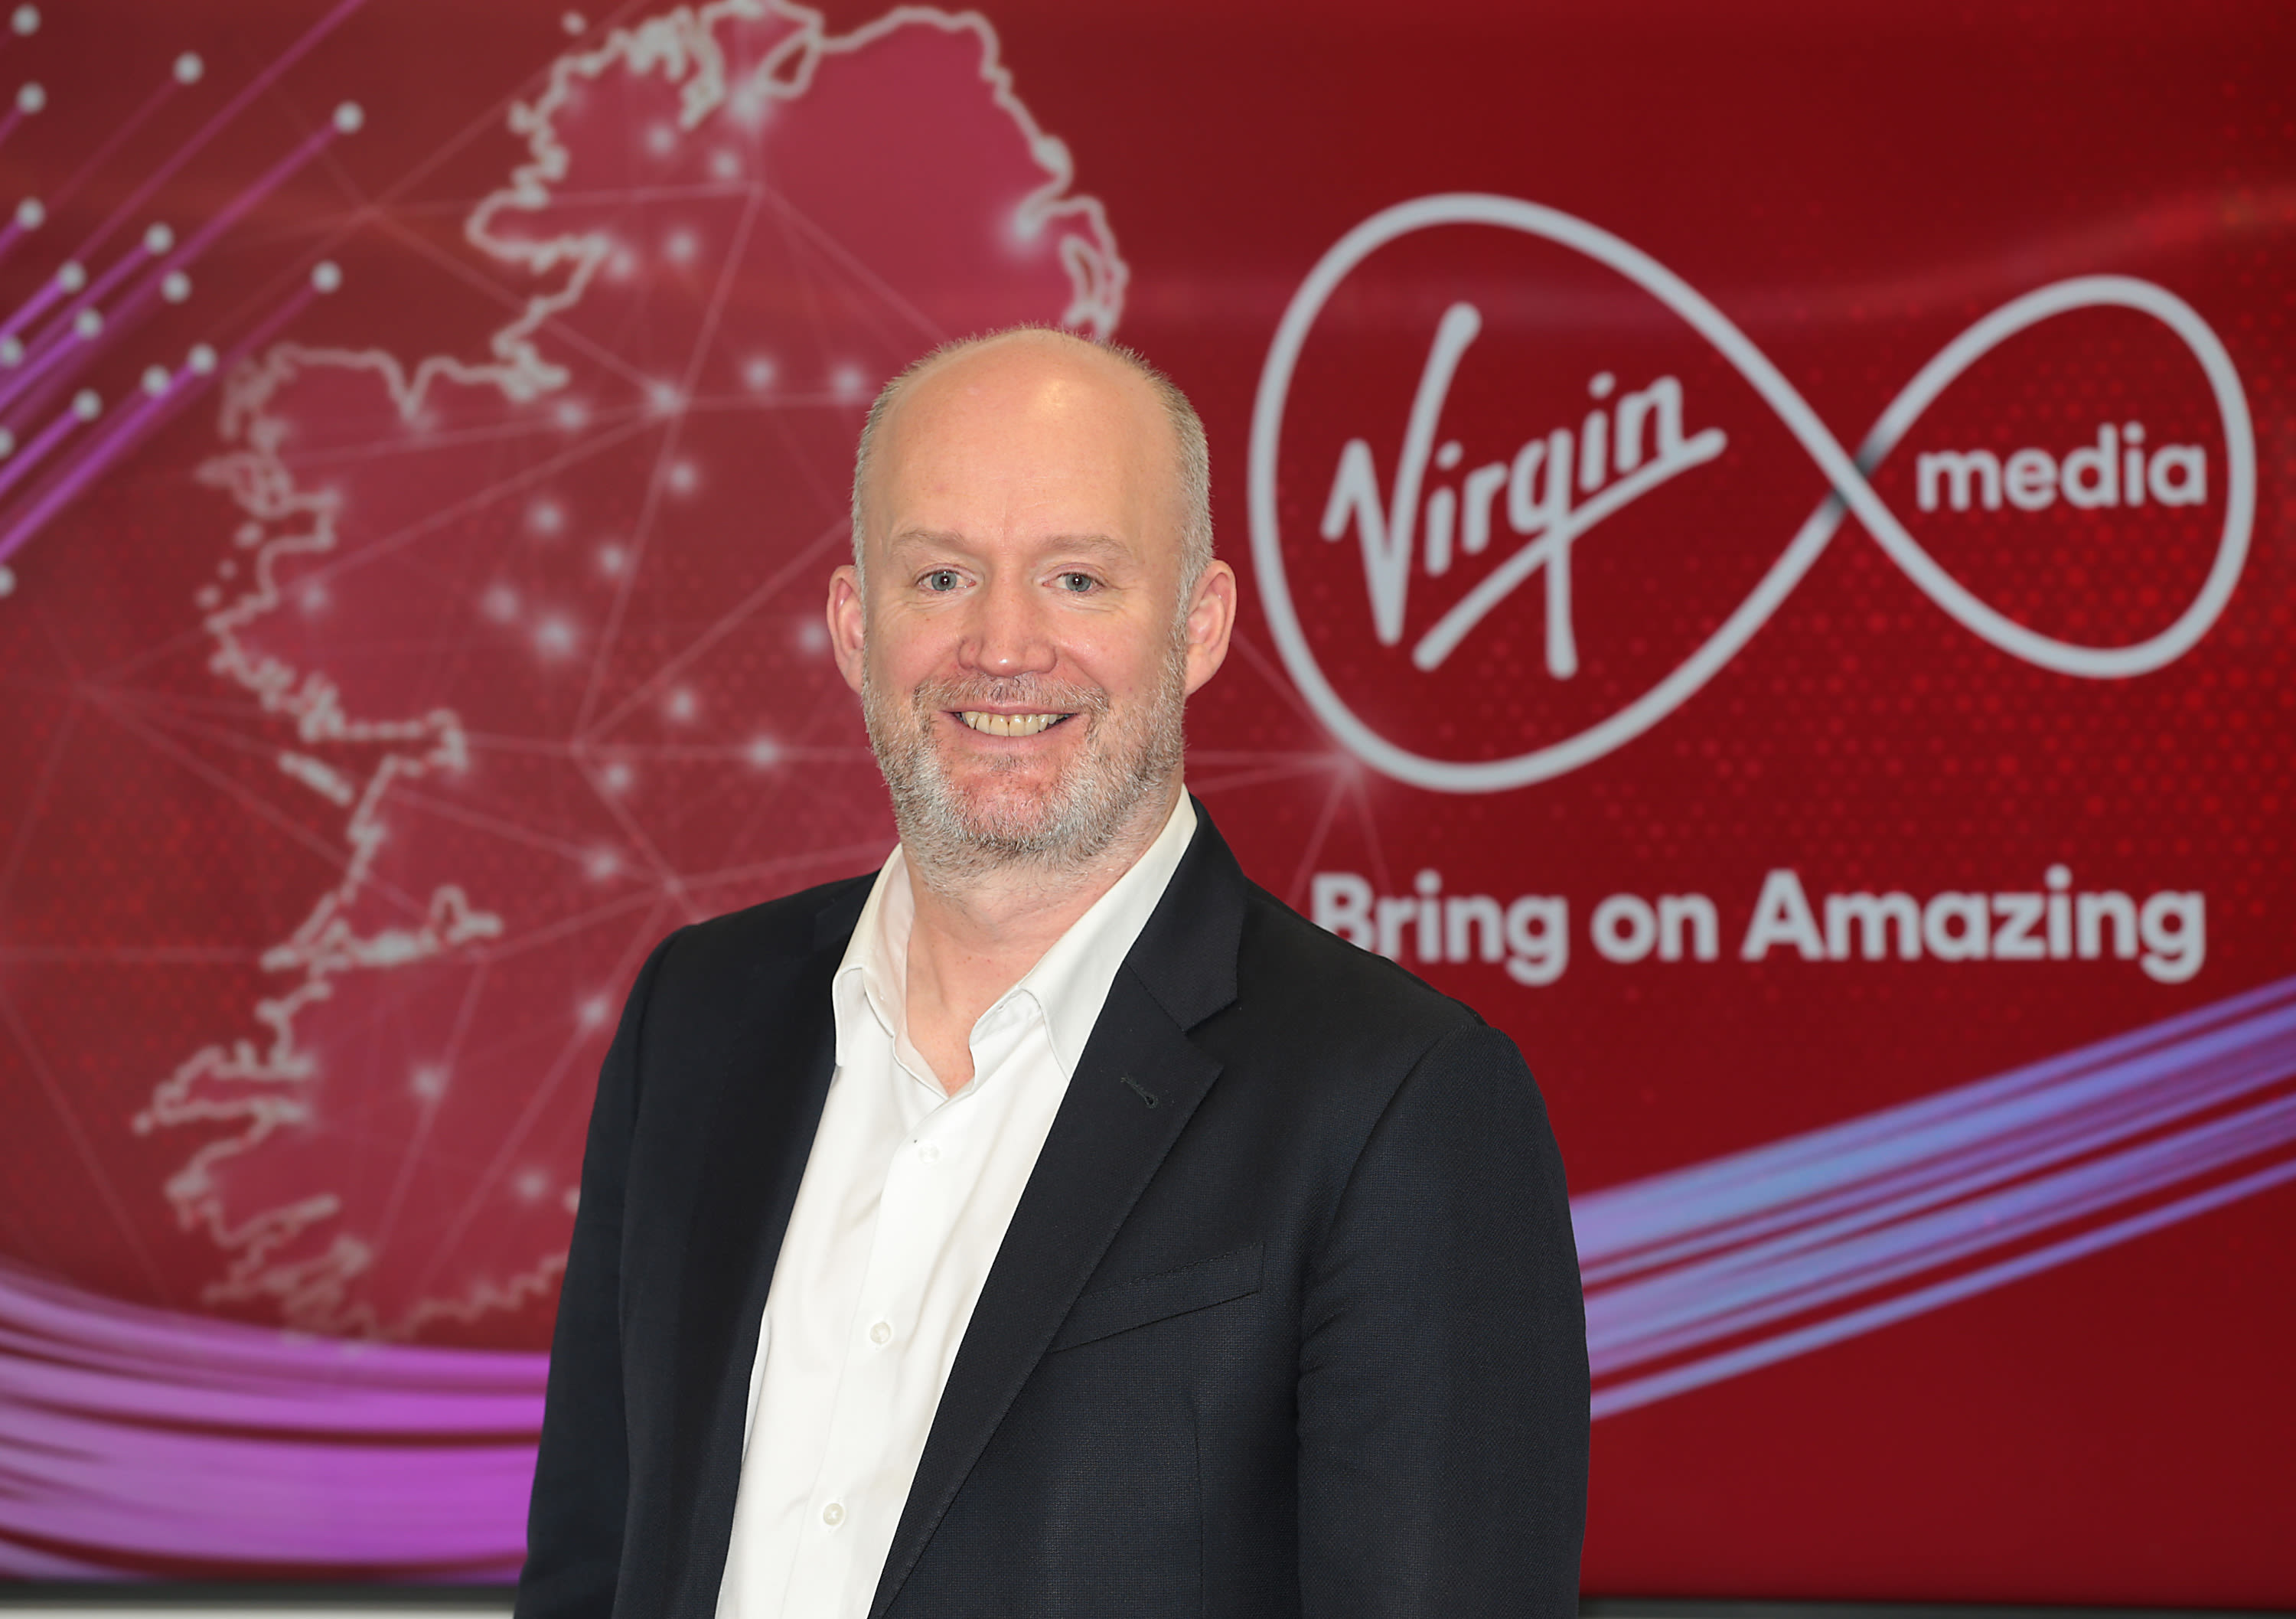 Tony Hanway, CEO of Virgin Media Ireland